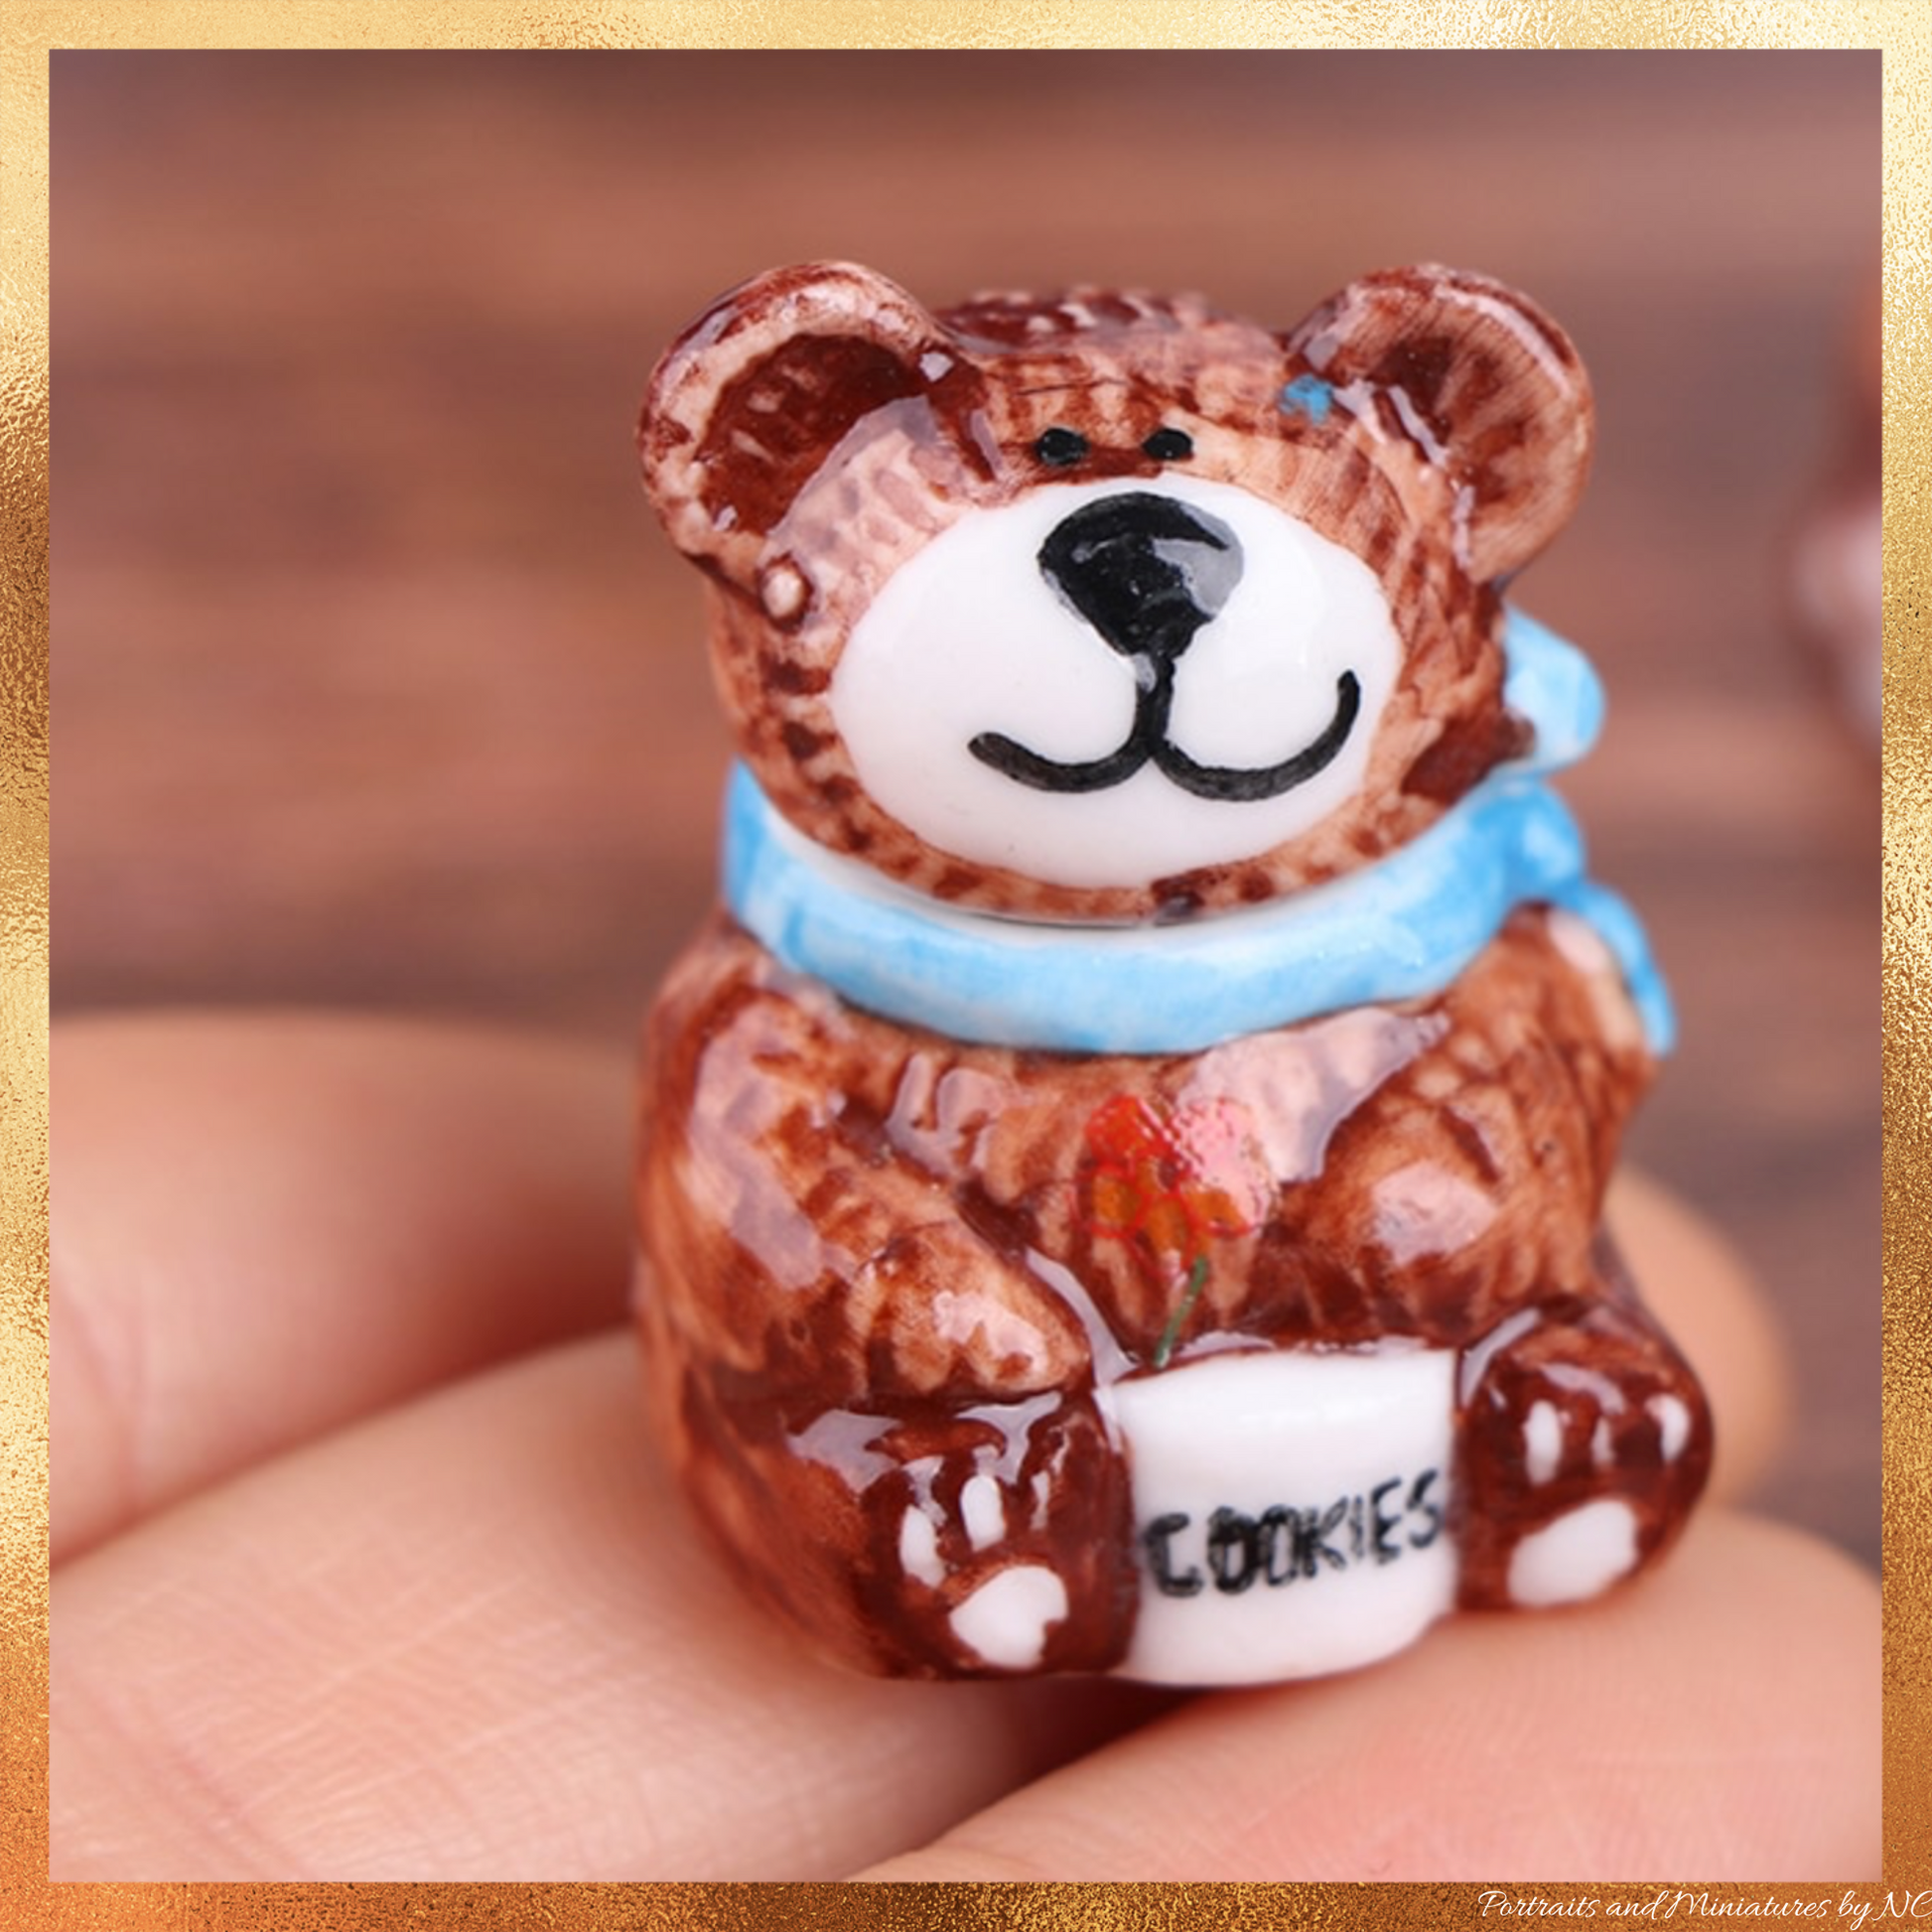 Bear Cookie Jar 1 12 Scale Miniature Dollhouse Accessory